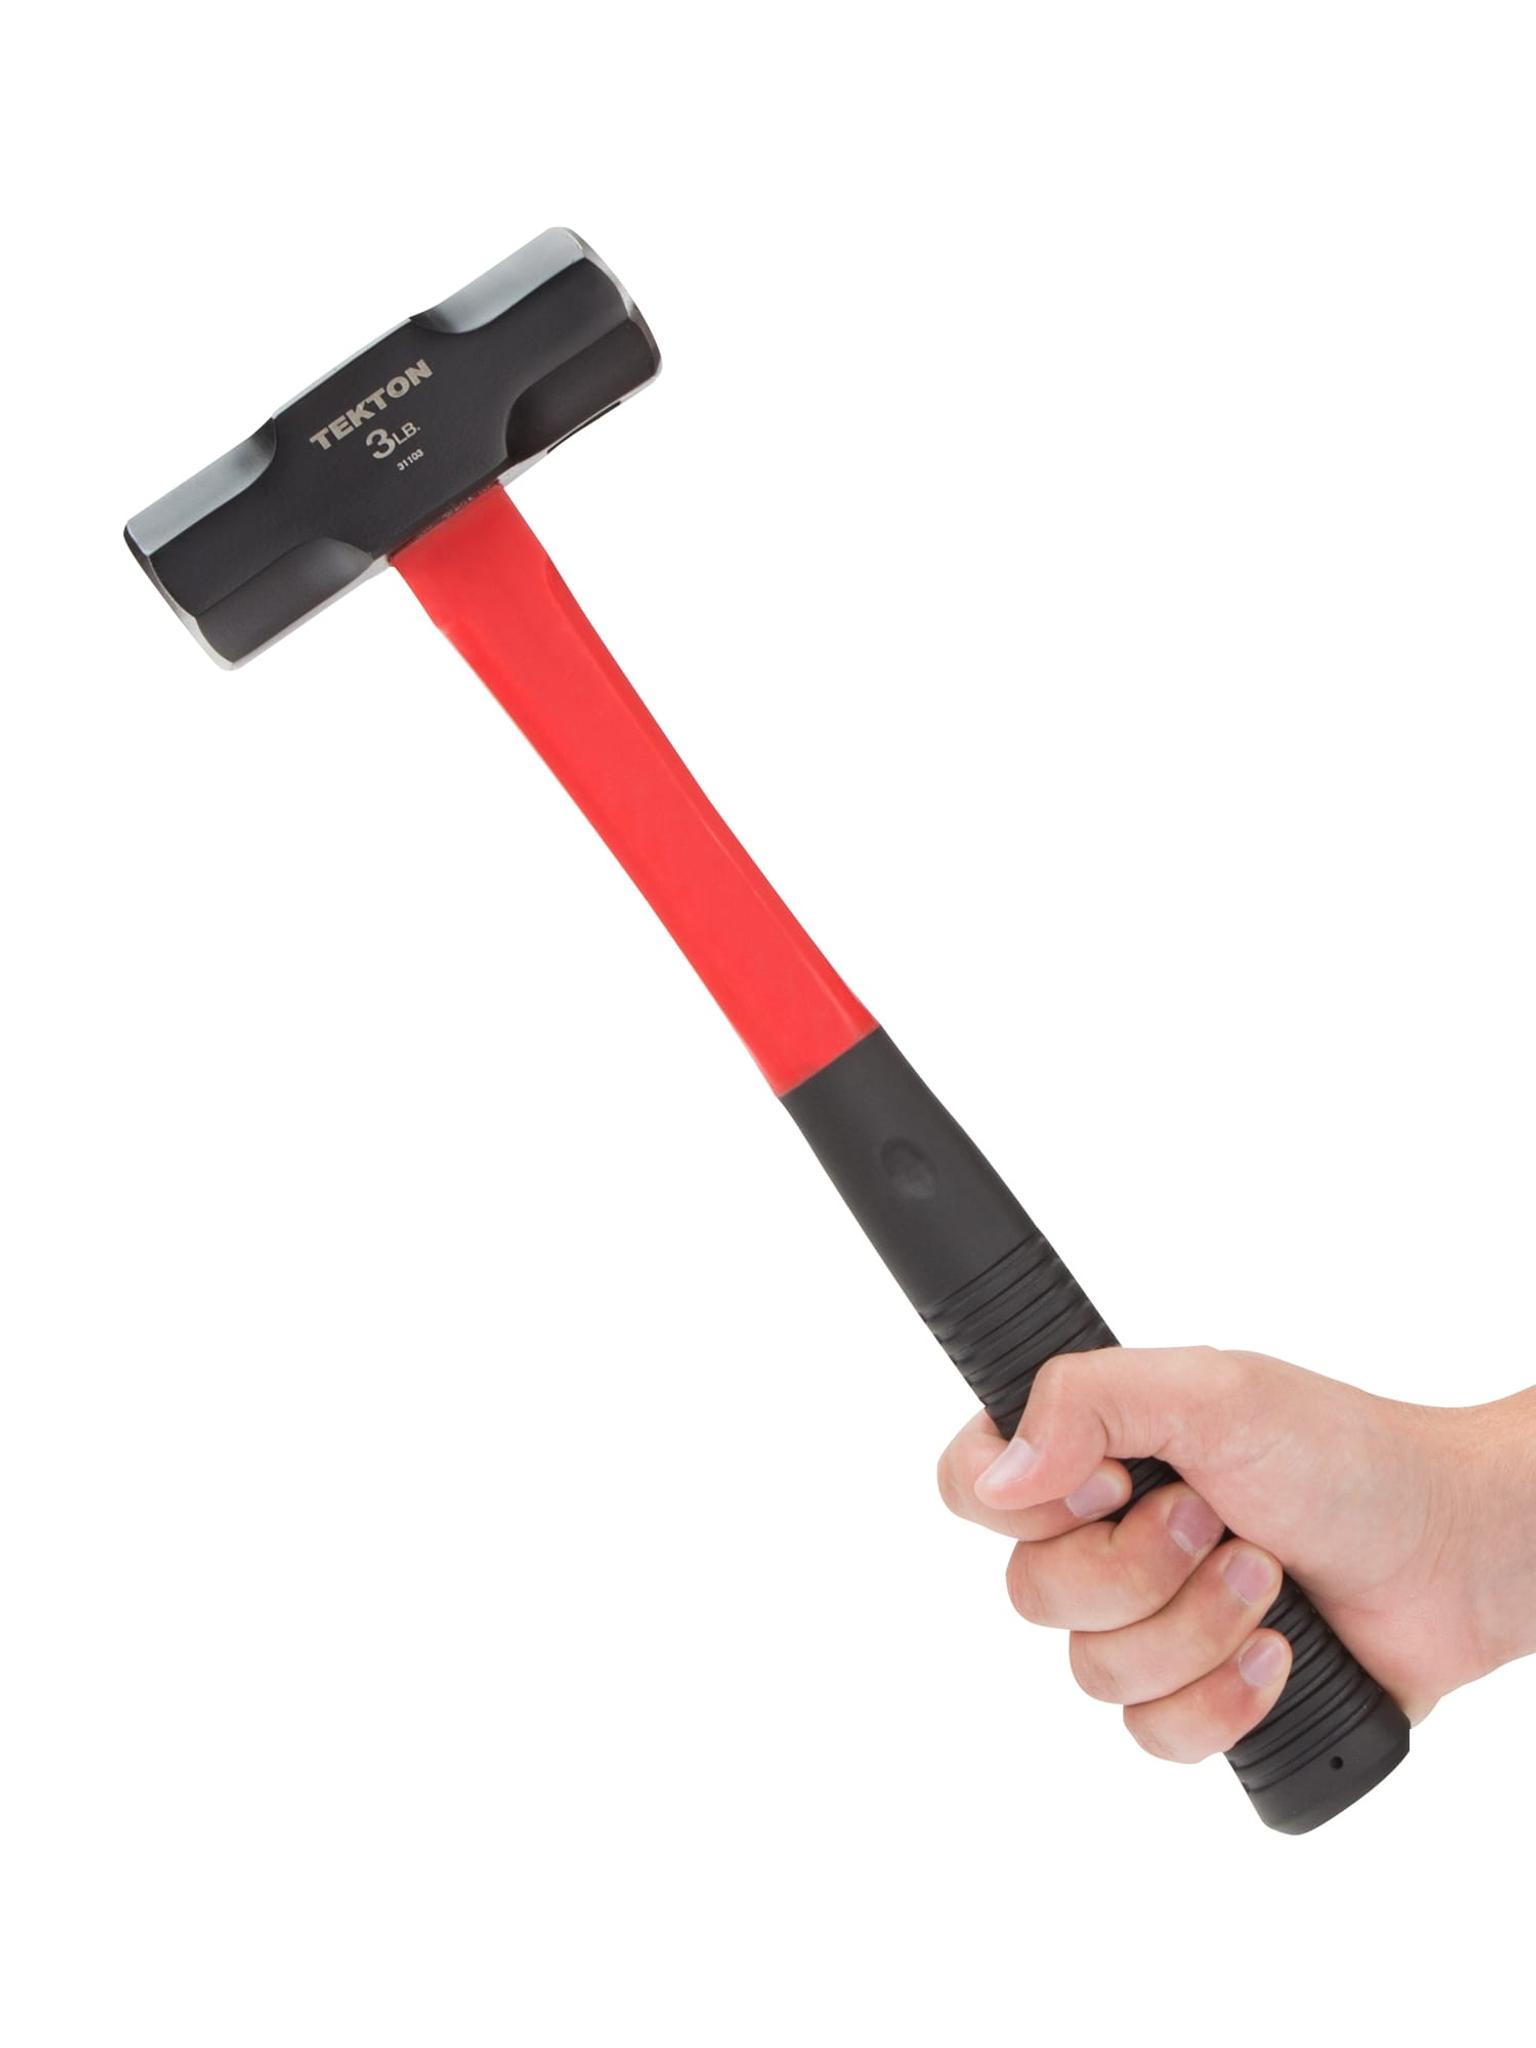 TEKTON 31103 3 lb. Sledge Hammer